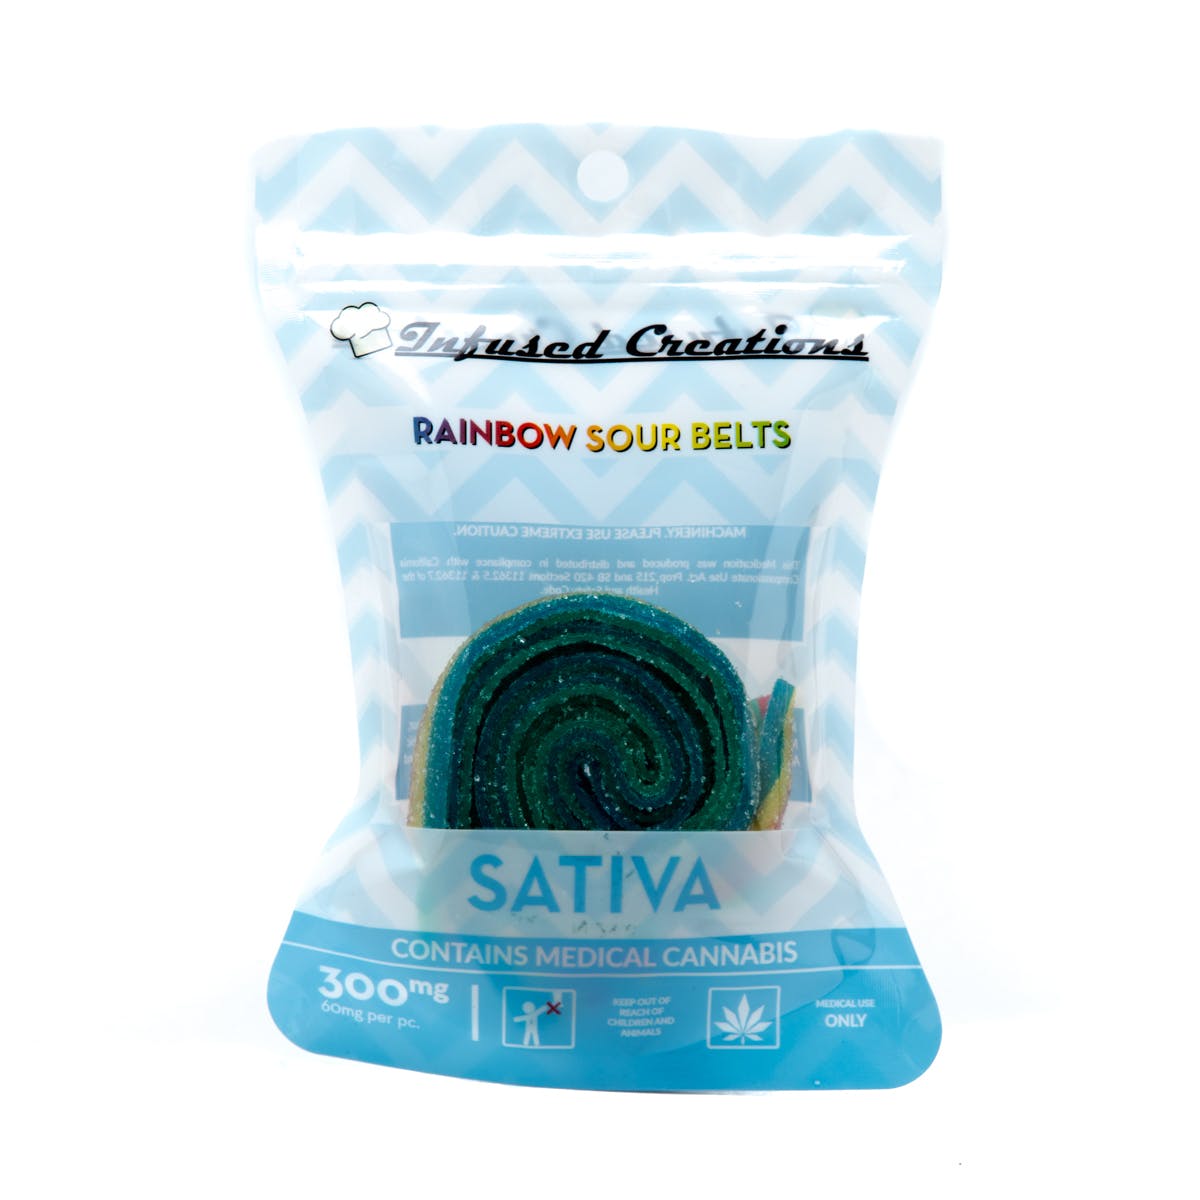 Rainbow Sour Belts Sativa, 300mg